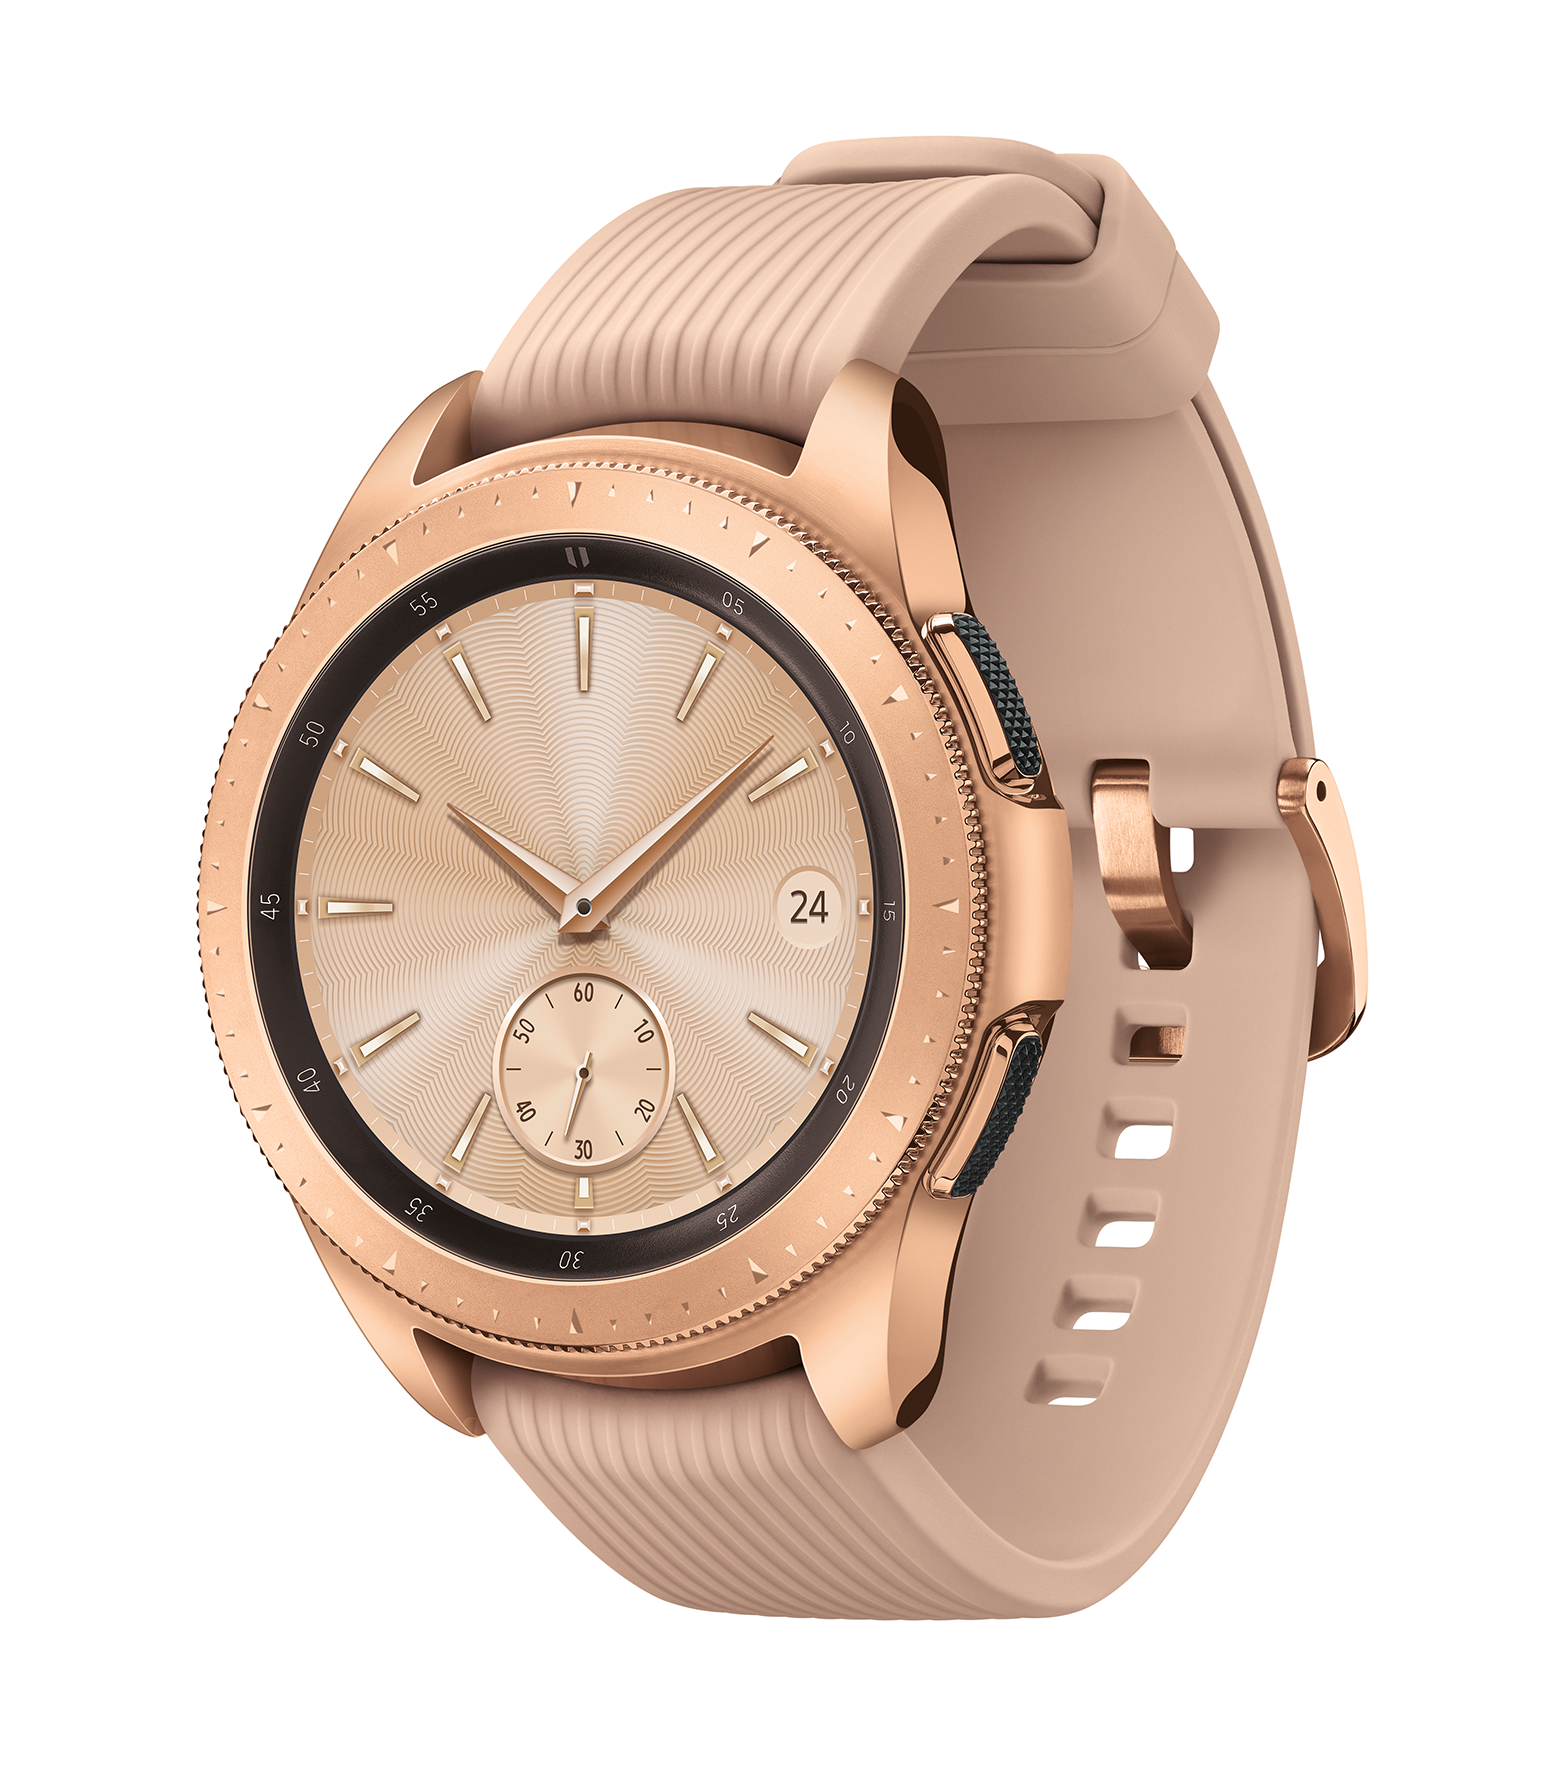 SAMSUNG Galaxy Watch - Bluetooth Smart Watch (42 mm) - Rose Gold - SM-R810NZDAXAR - image 4 of 15